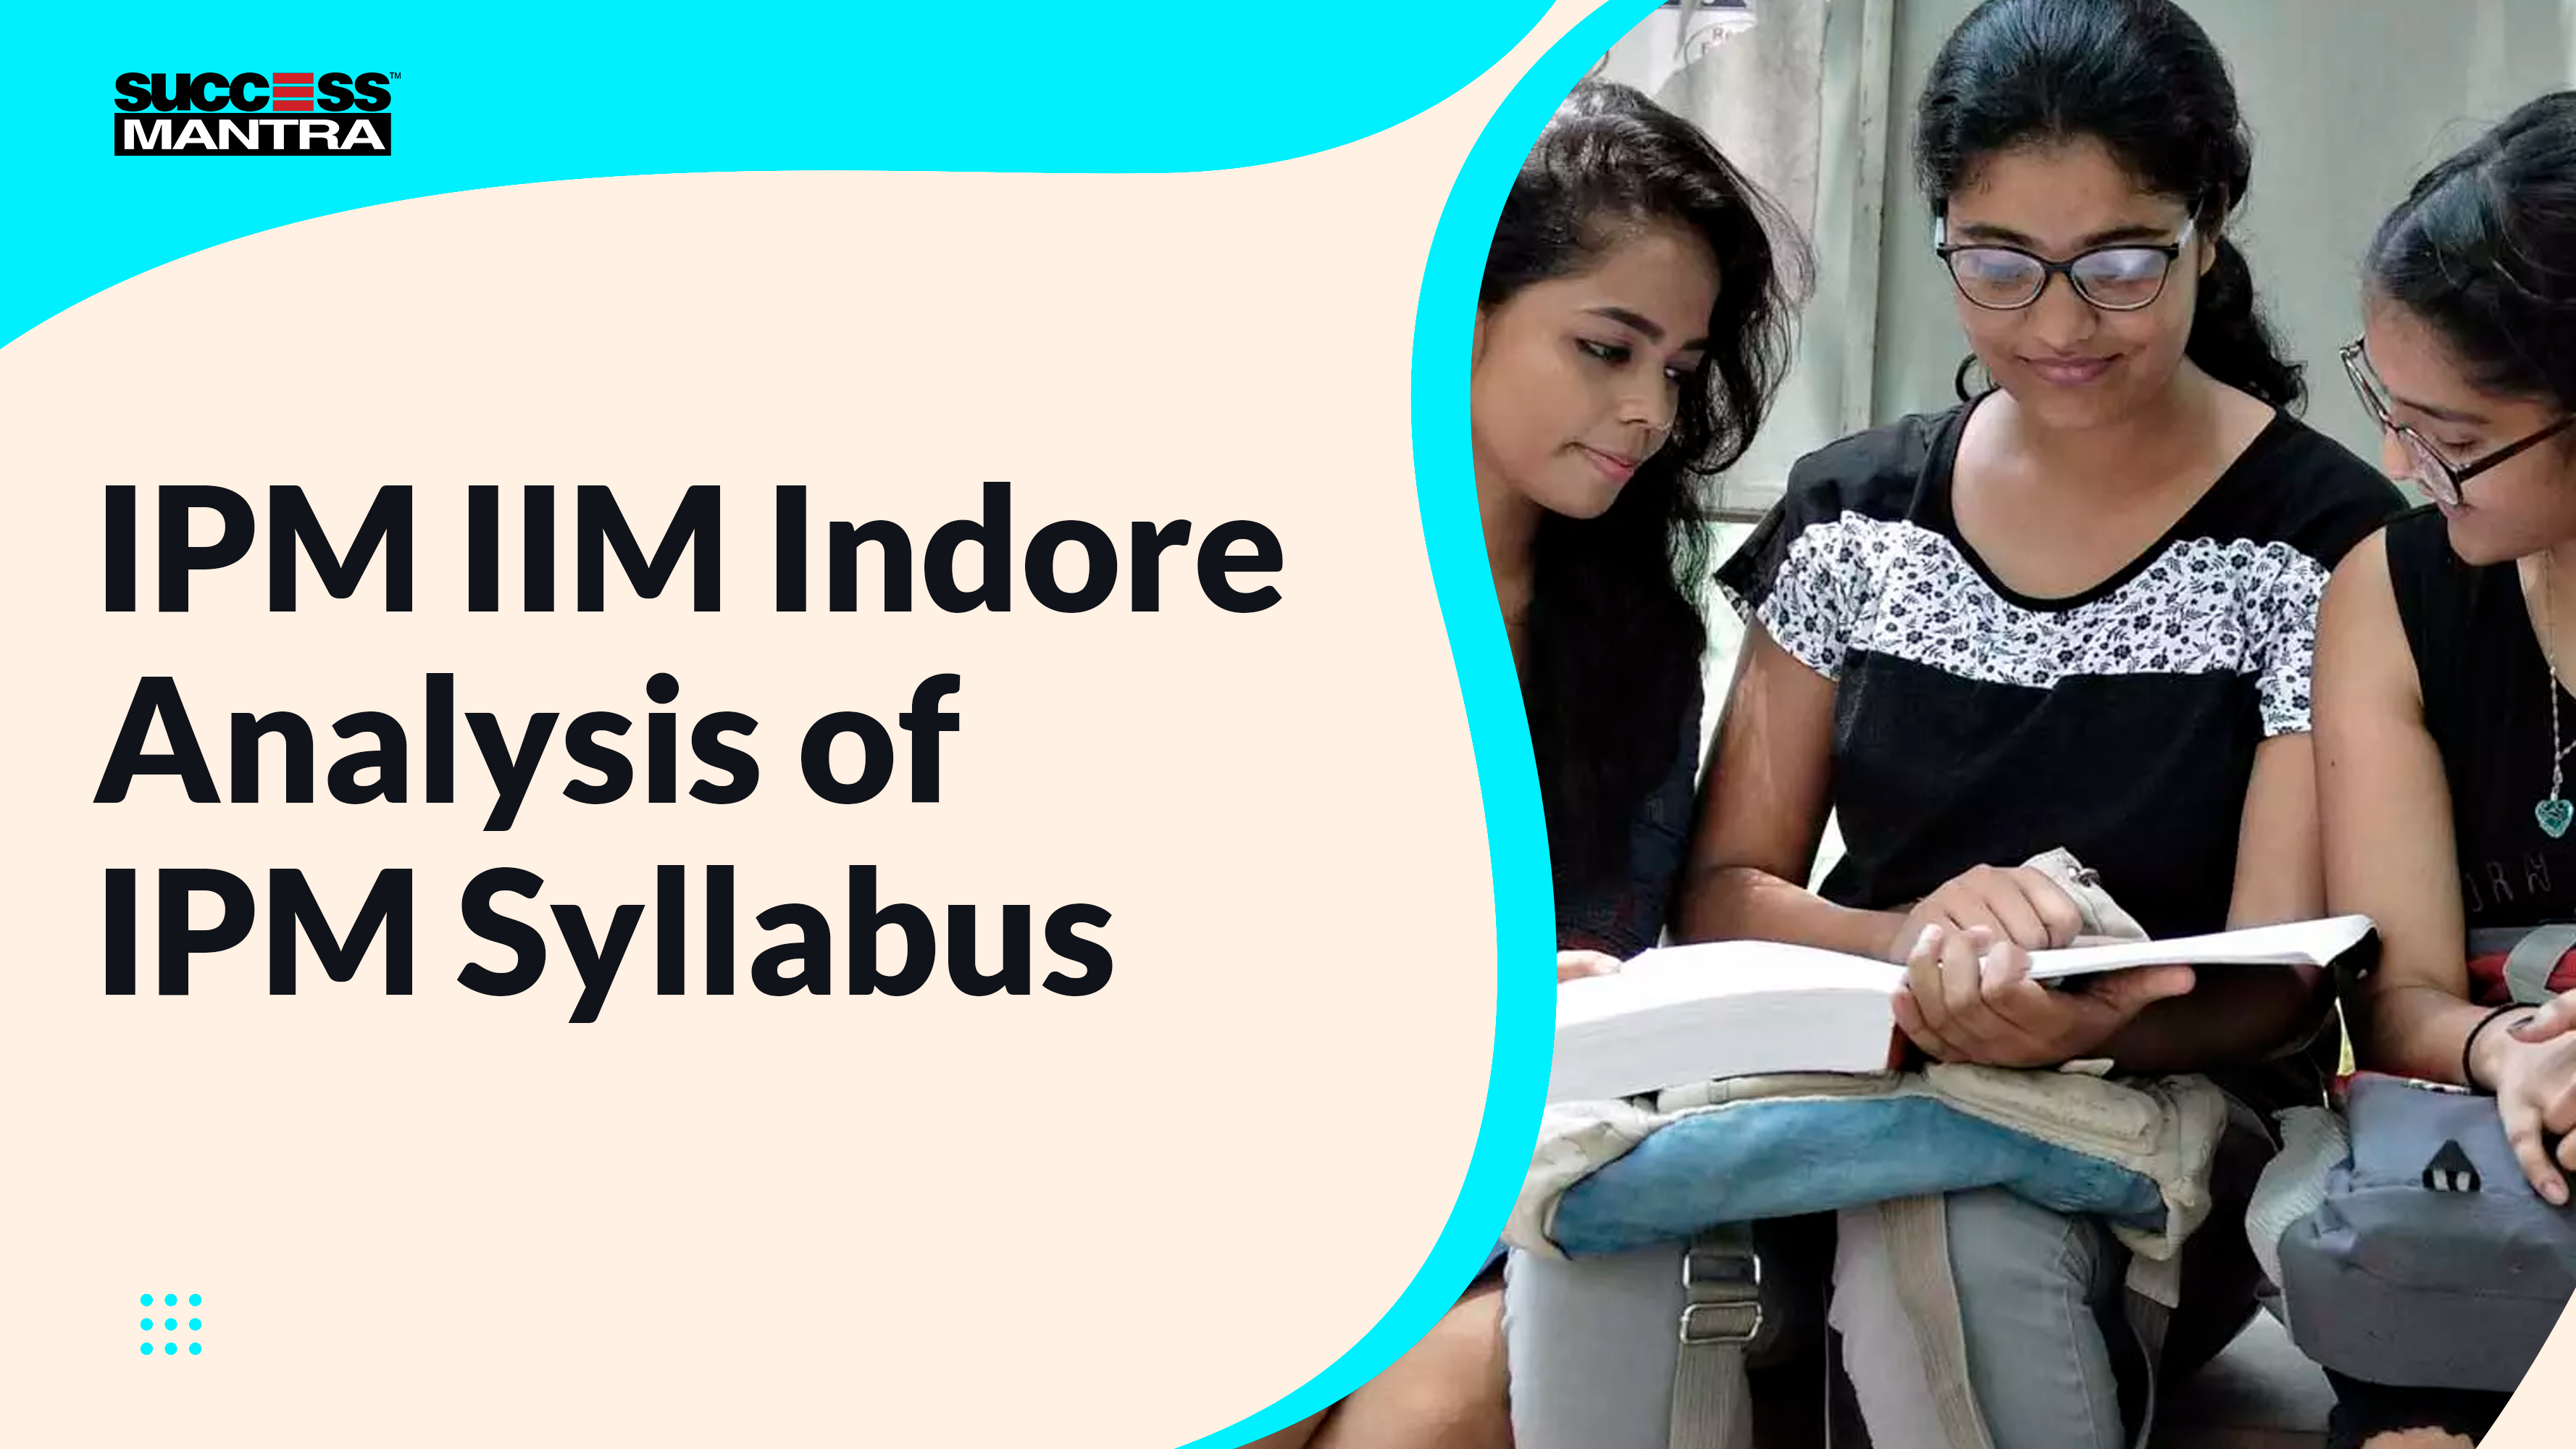 IPM IIM Indore Analysis of IPM Syllabus, Success Mantra Coaching Institute, Best Coaching Institute For BBA Located In GTB Nagar Delhi 